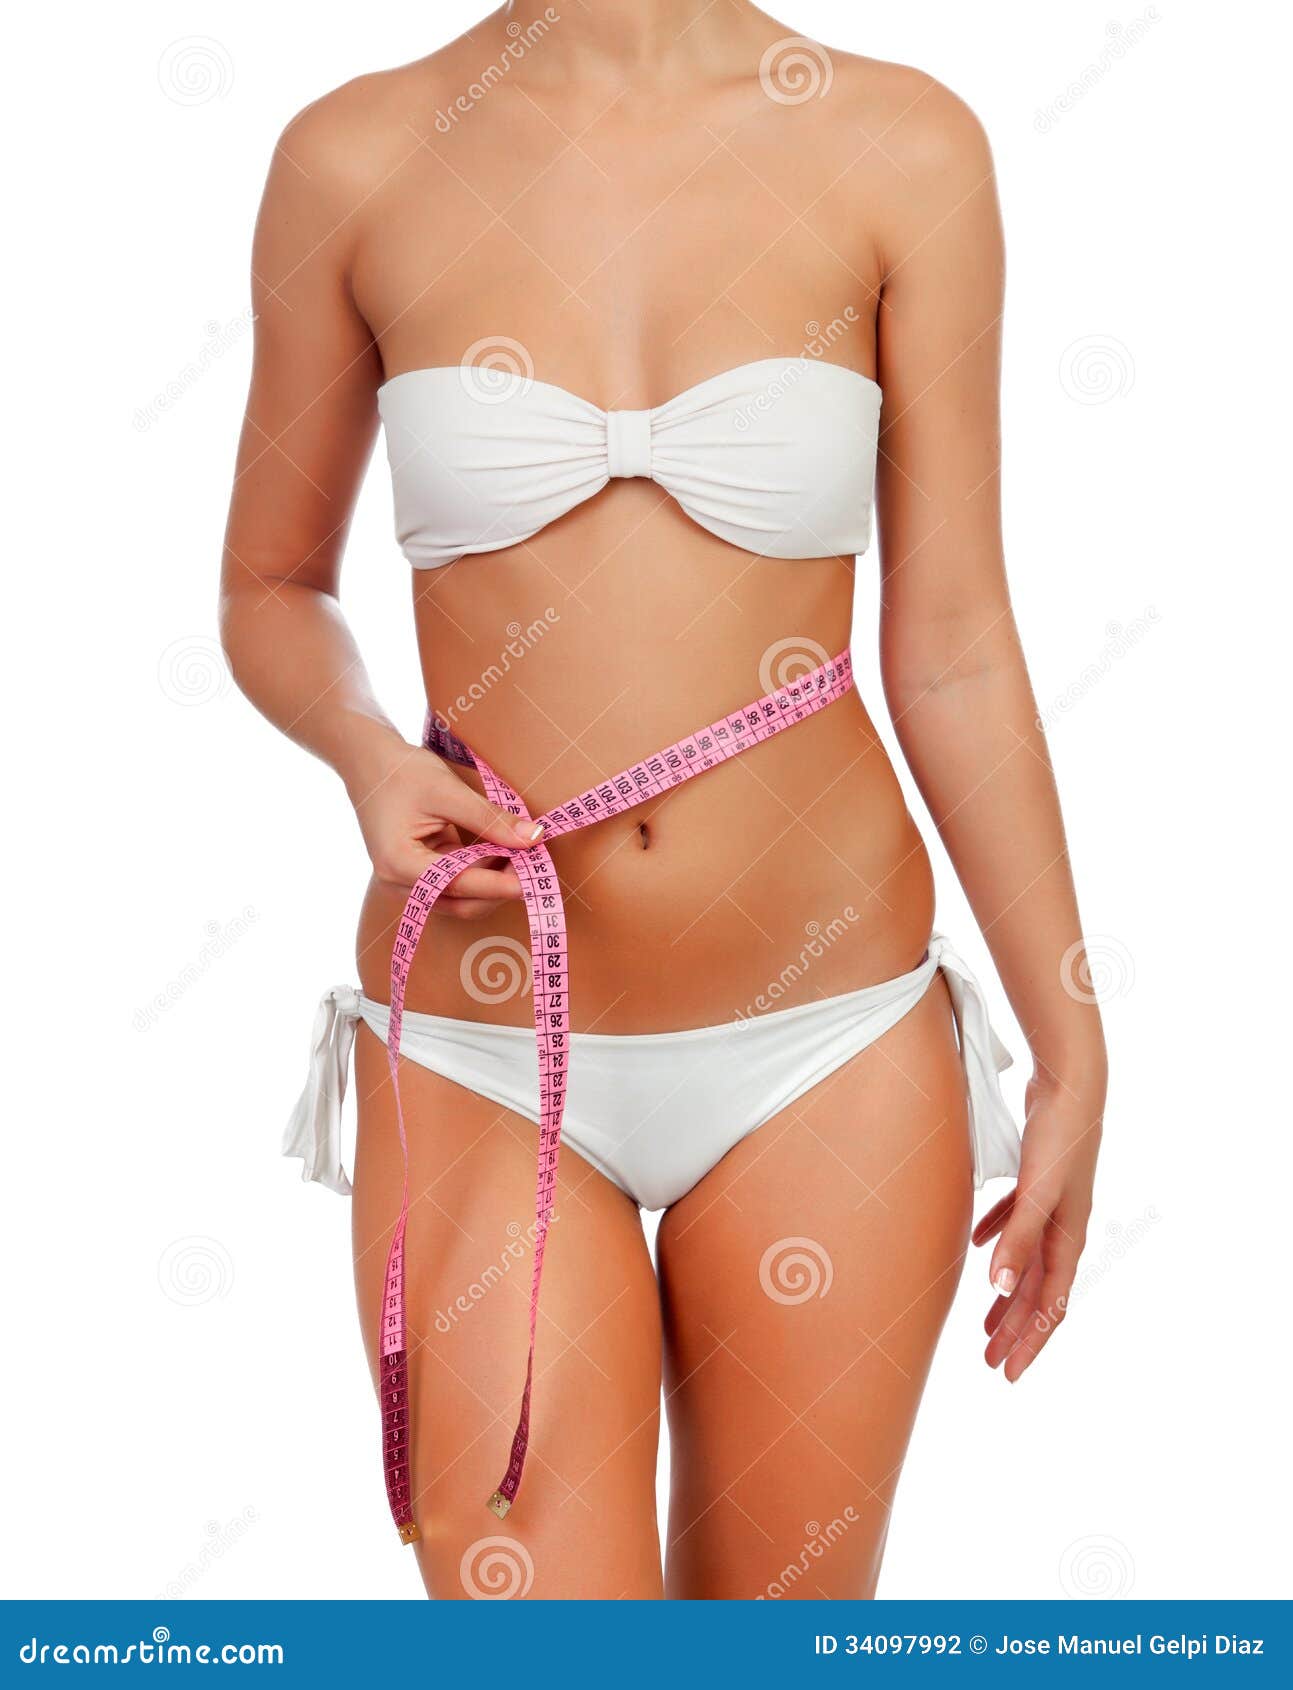 Premium Photo  Woman bikini or tape measure for legs thighs or